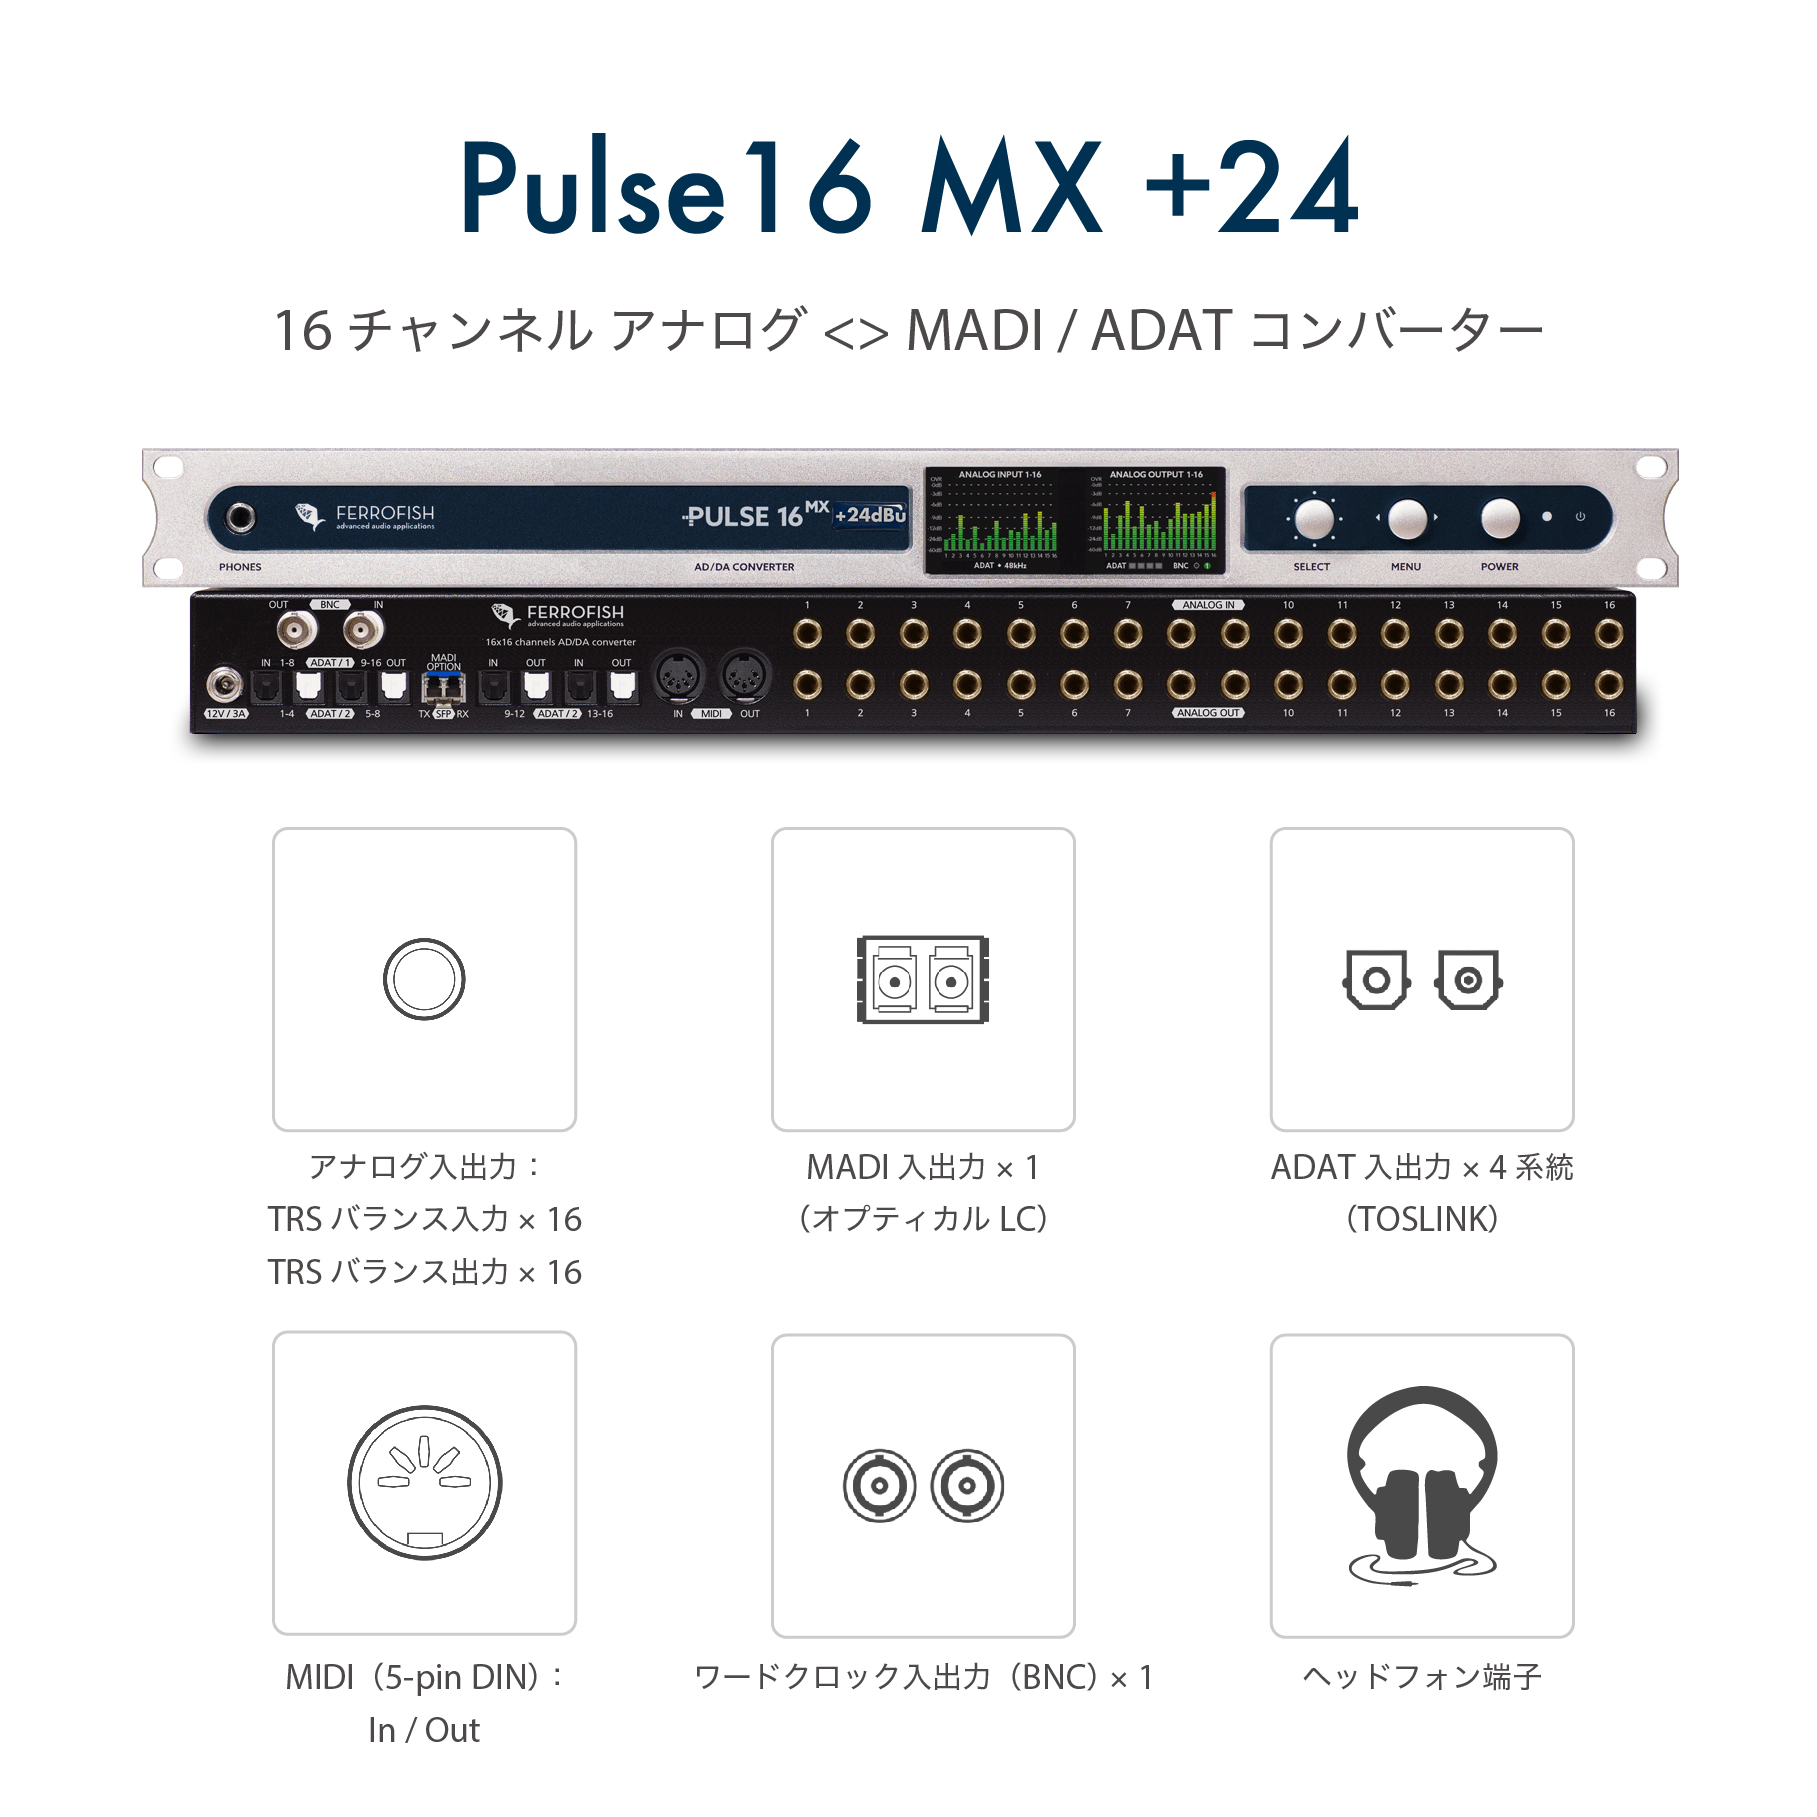 Pulse16 MX +24